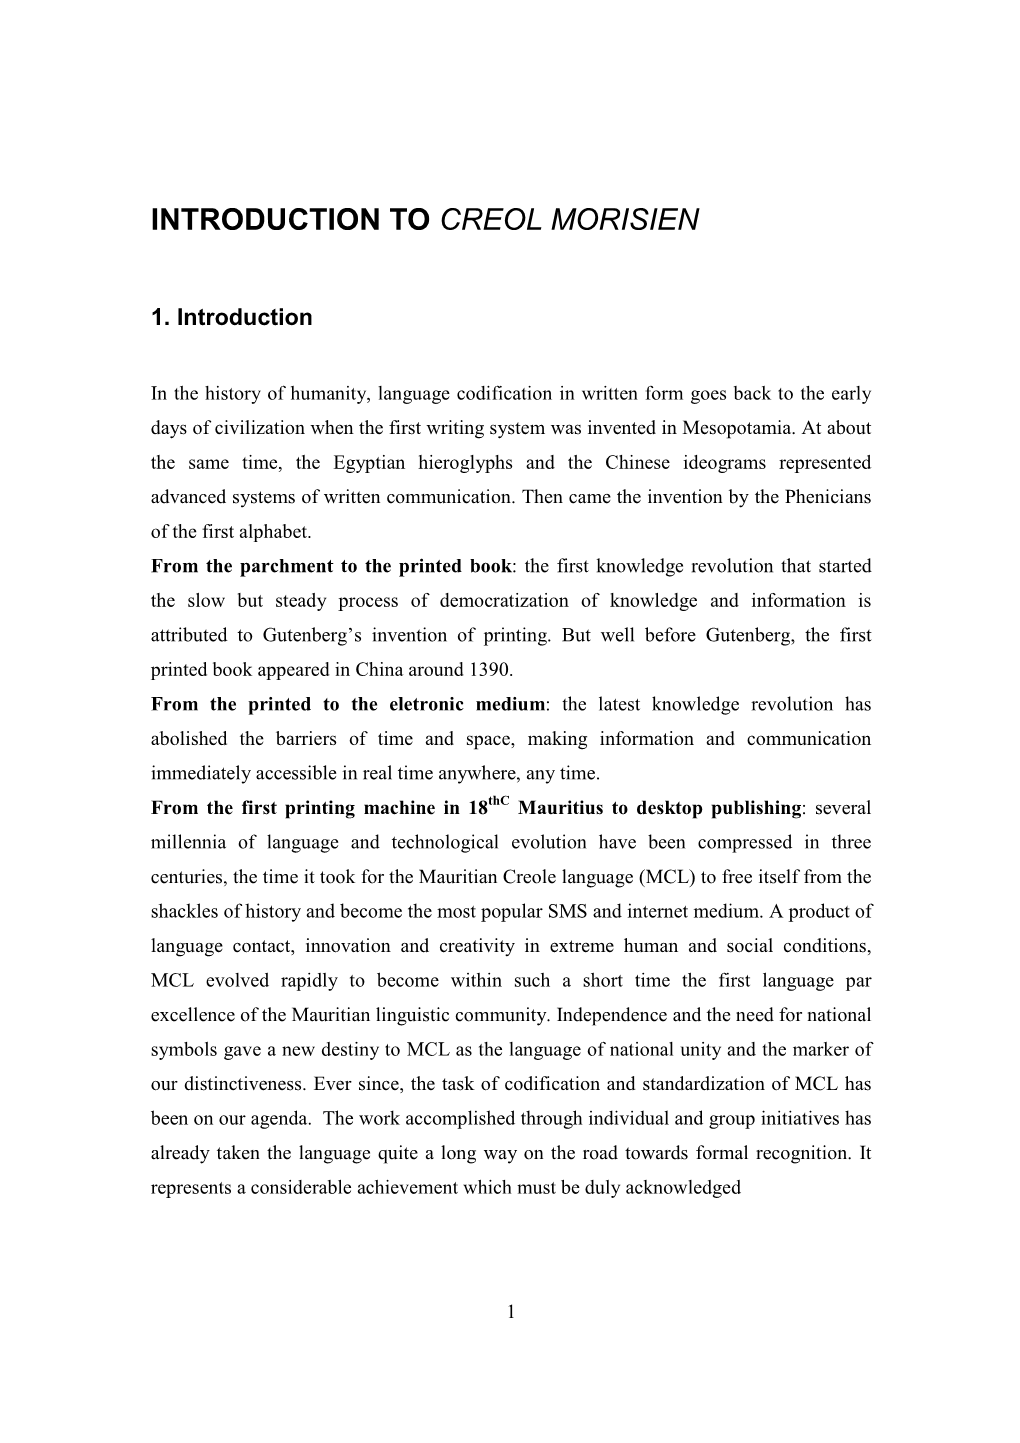 Introduction to Creole Morisyen